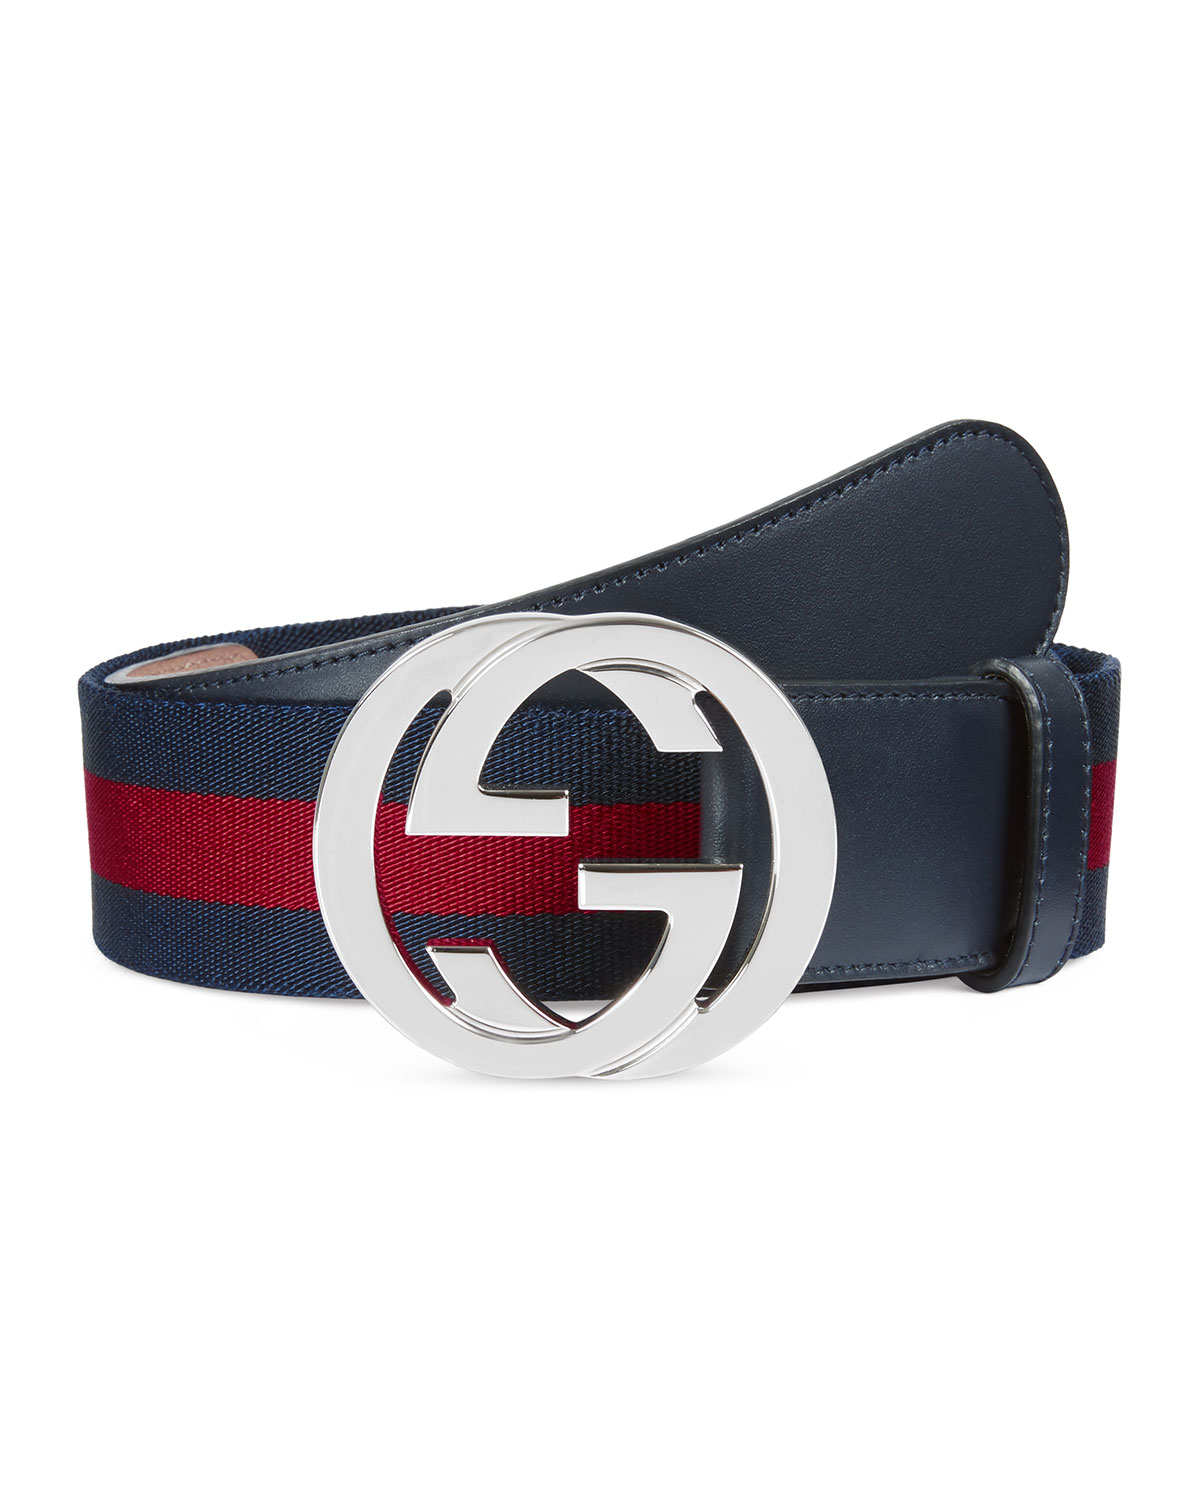 gucci belt red white blue